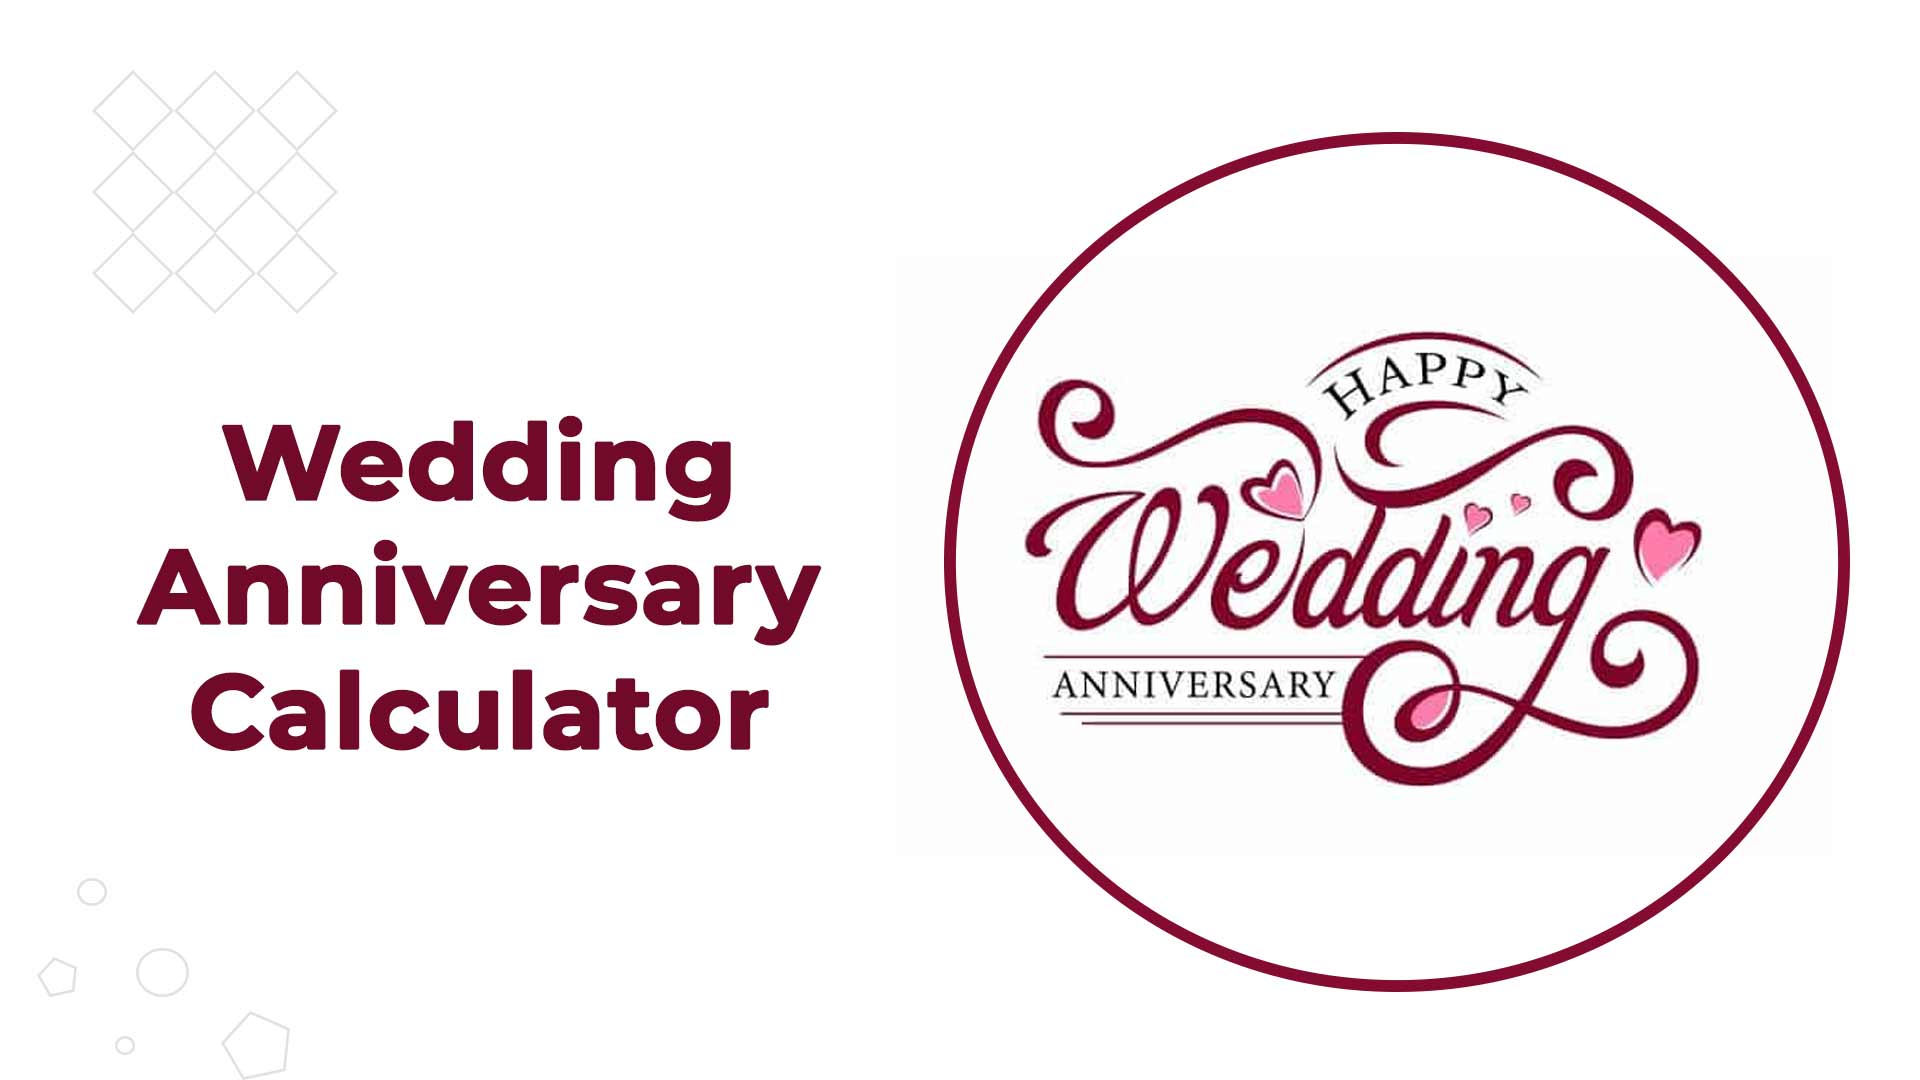 Best Wedding Anniversary Calculator - Calculate Anniversary Date